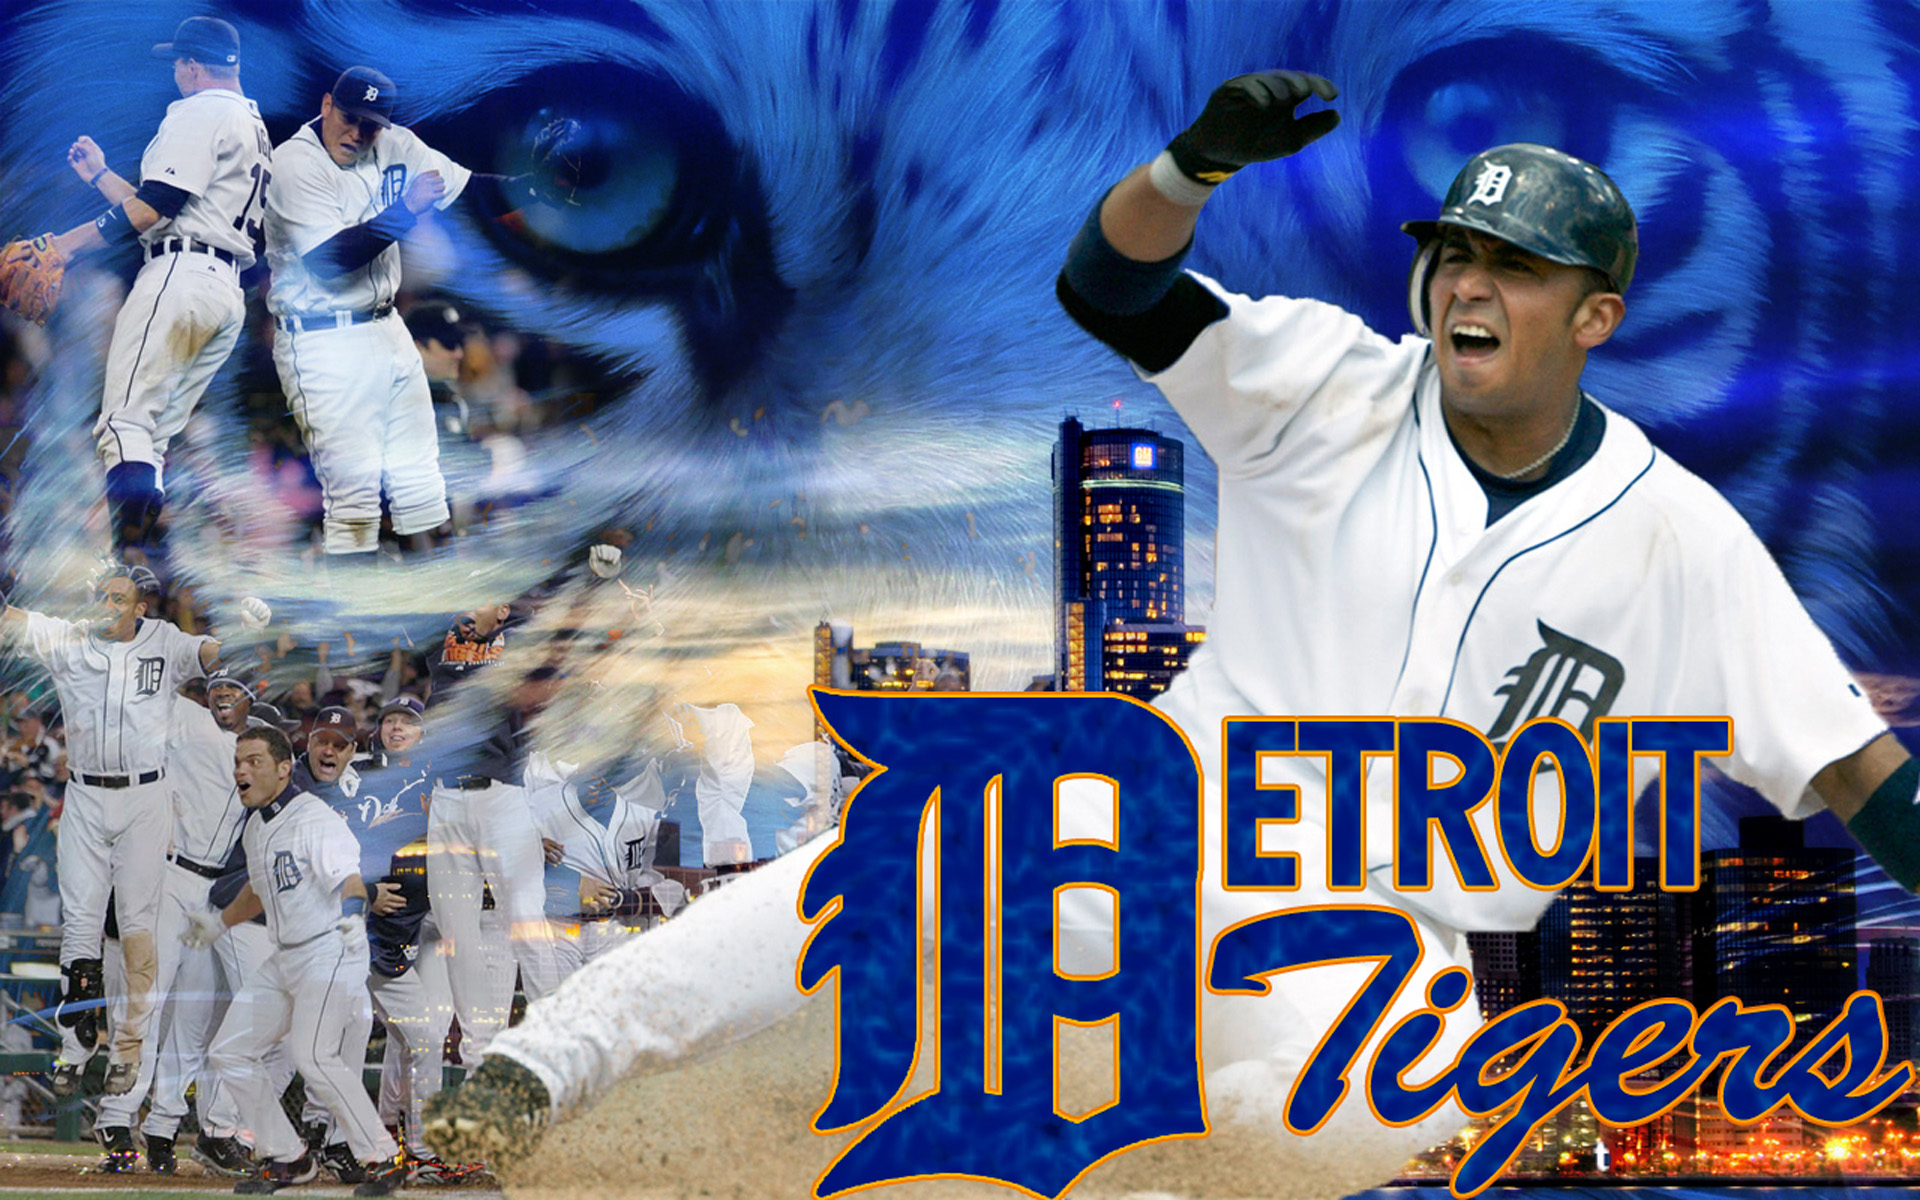 detroit tigers wallpaper,baseball player,baseball uniform,sports uniform,college baseball,team sport